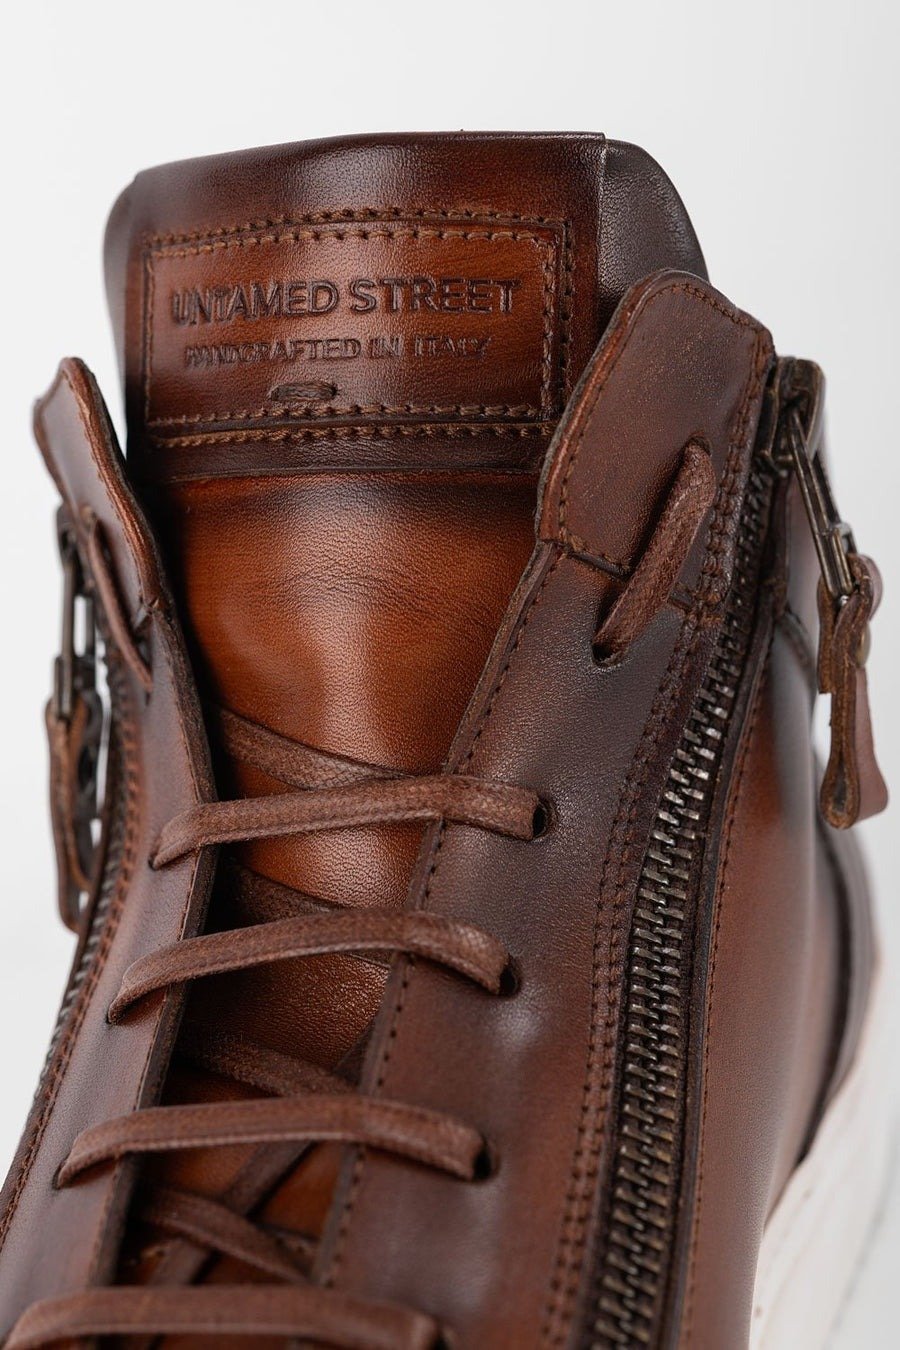 SOHO cocoa-brown patina high sneakers